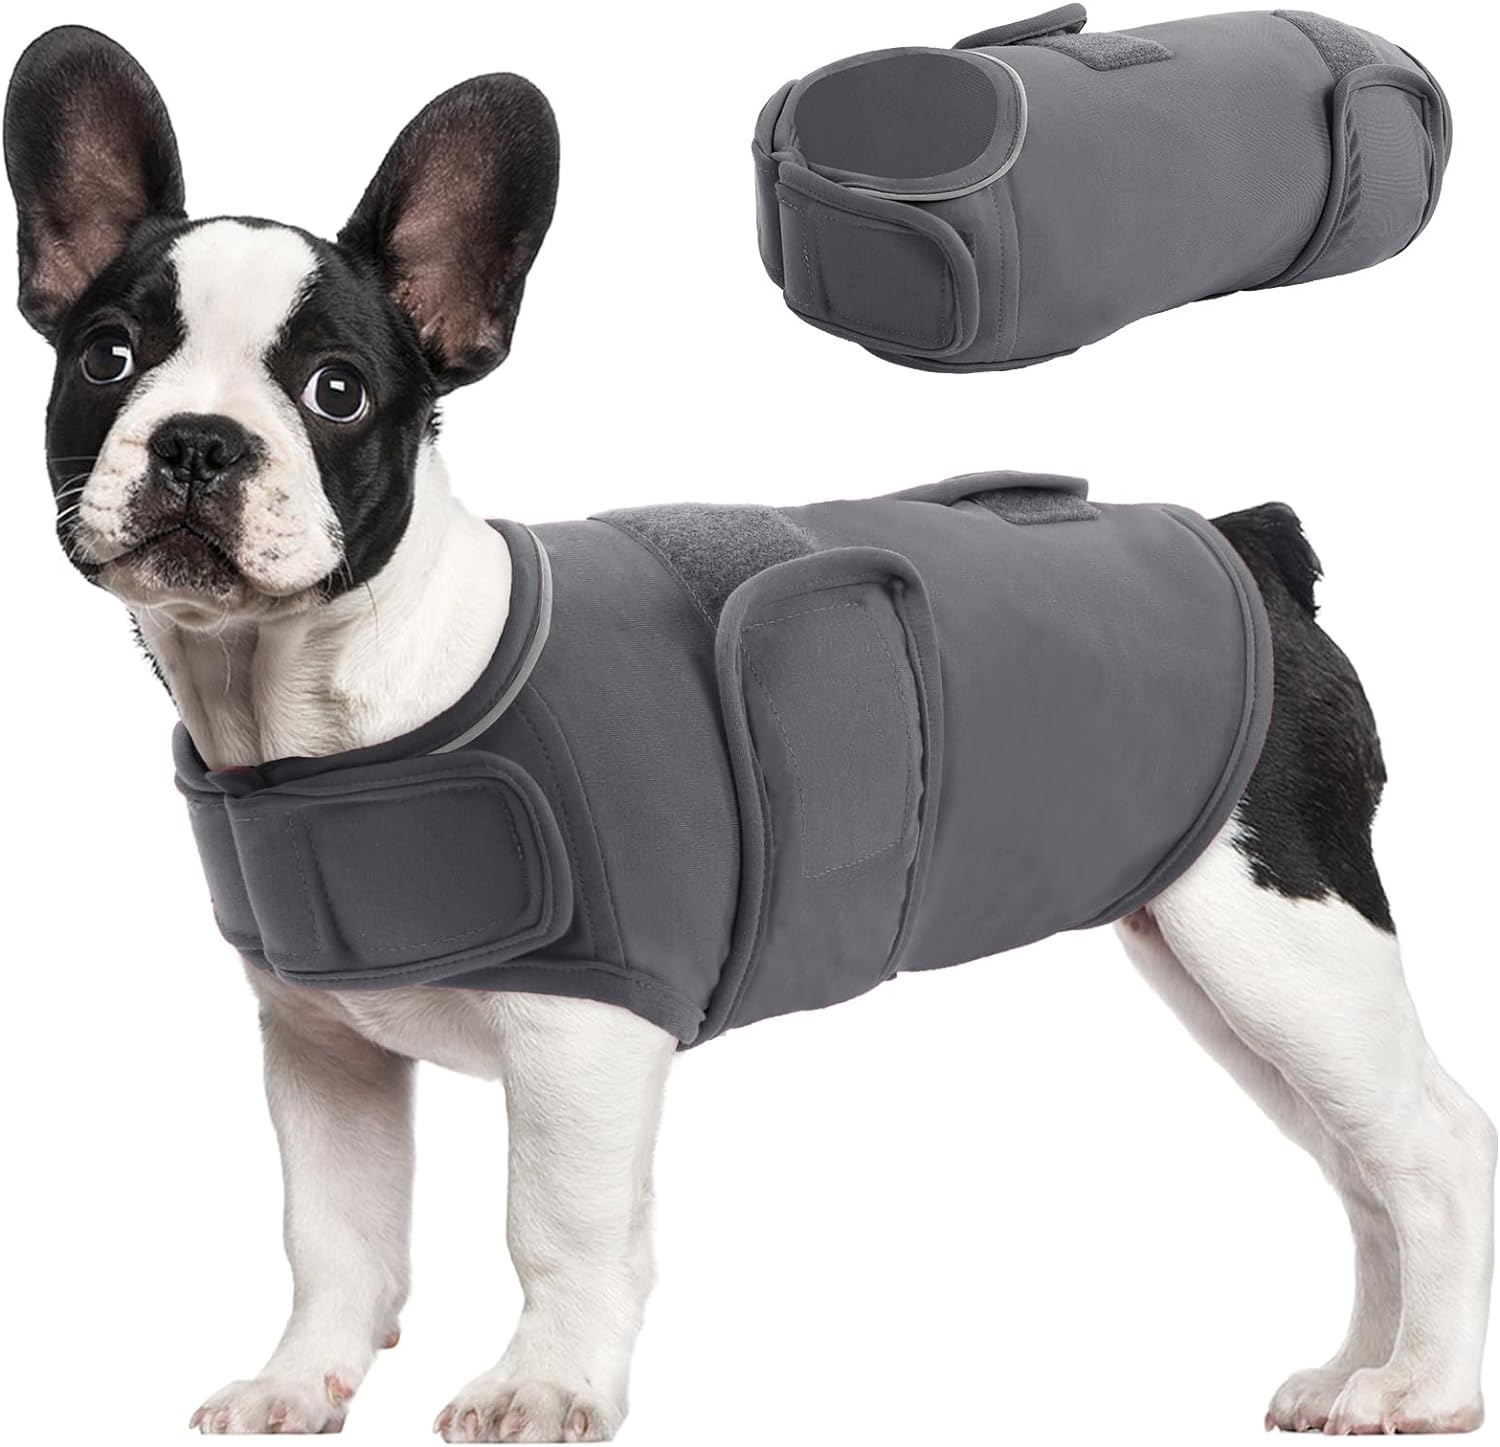 Anti-Anxiety Dog Calming Vest